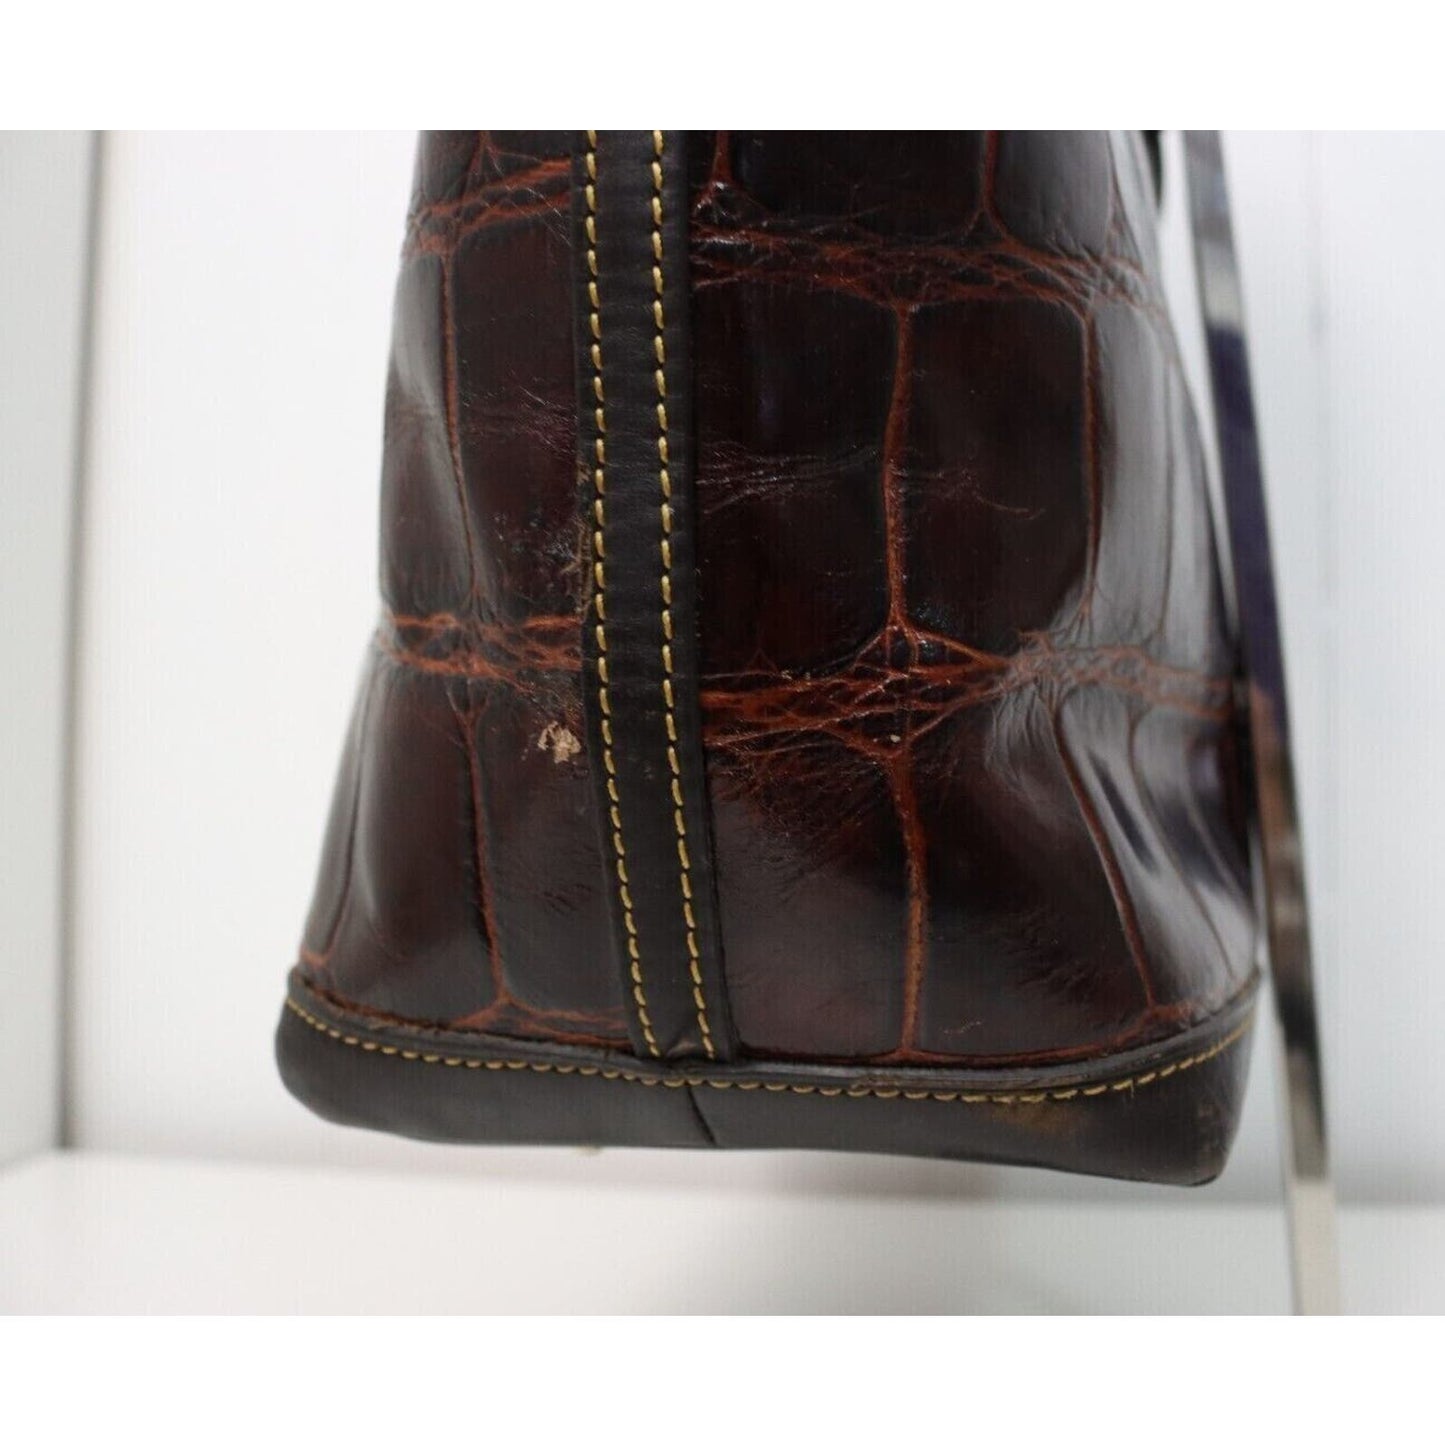 Dooney and Bourke Leather Shoulder Bag Embossed Leather